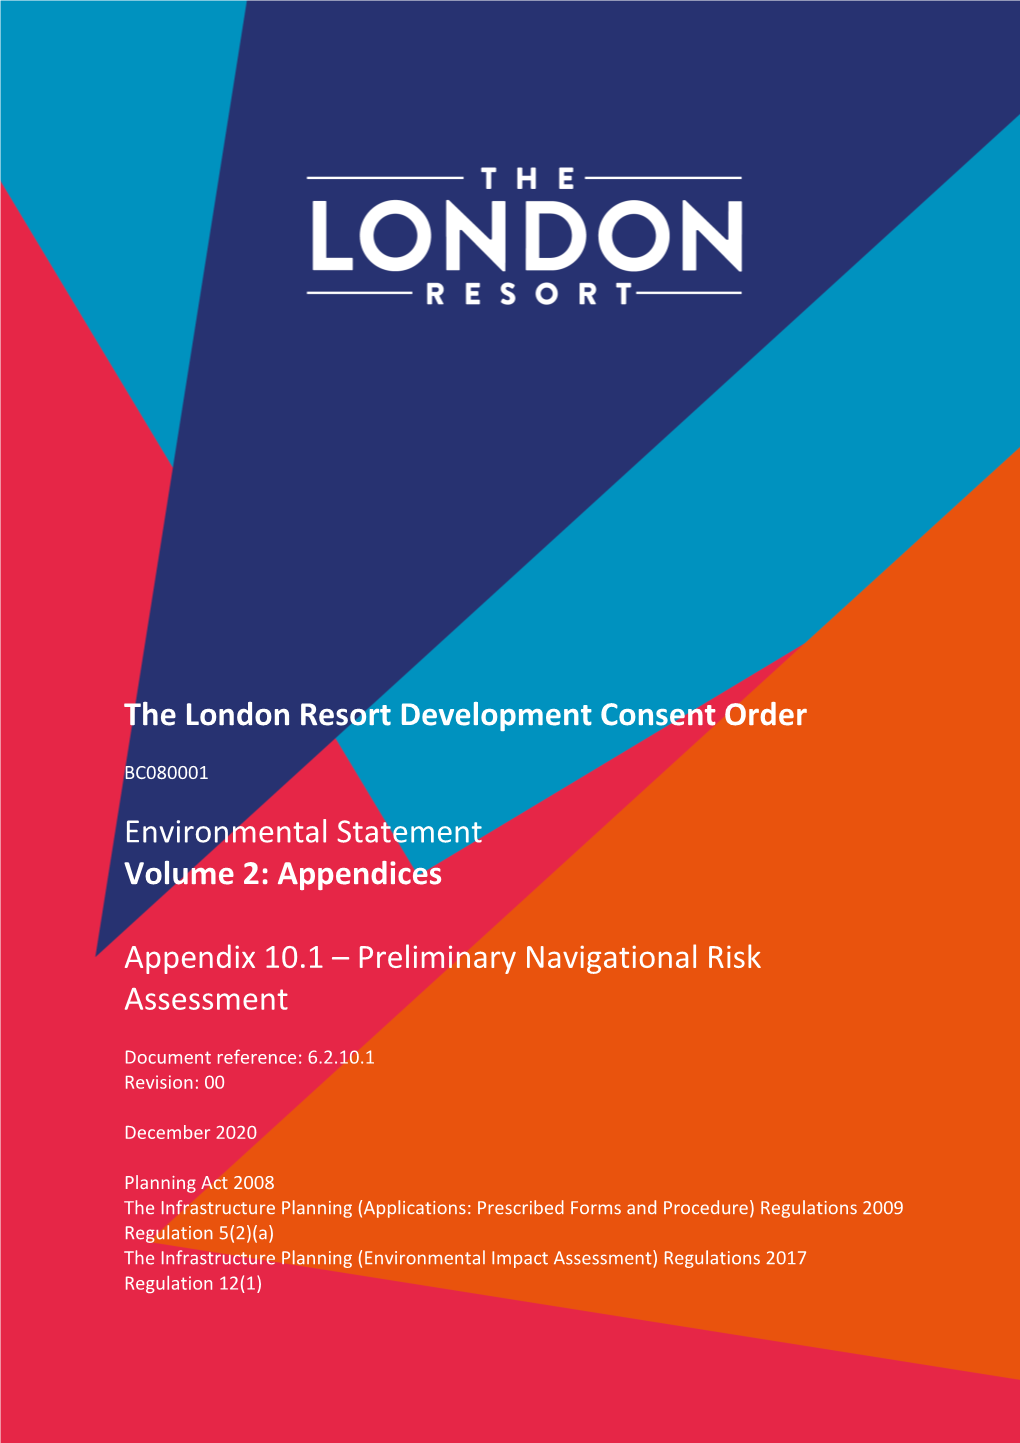 The London Resort Development Consent Order